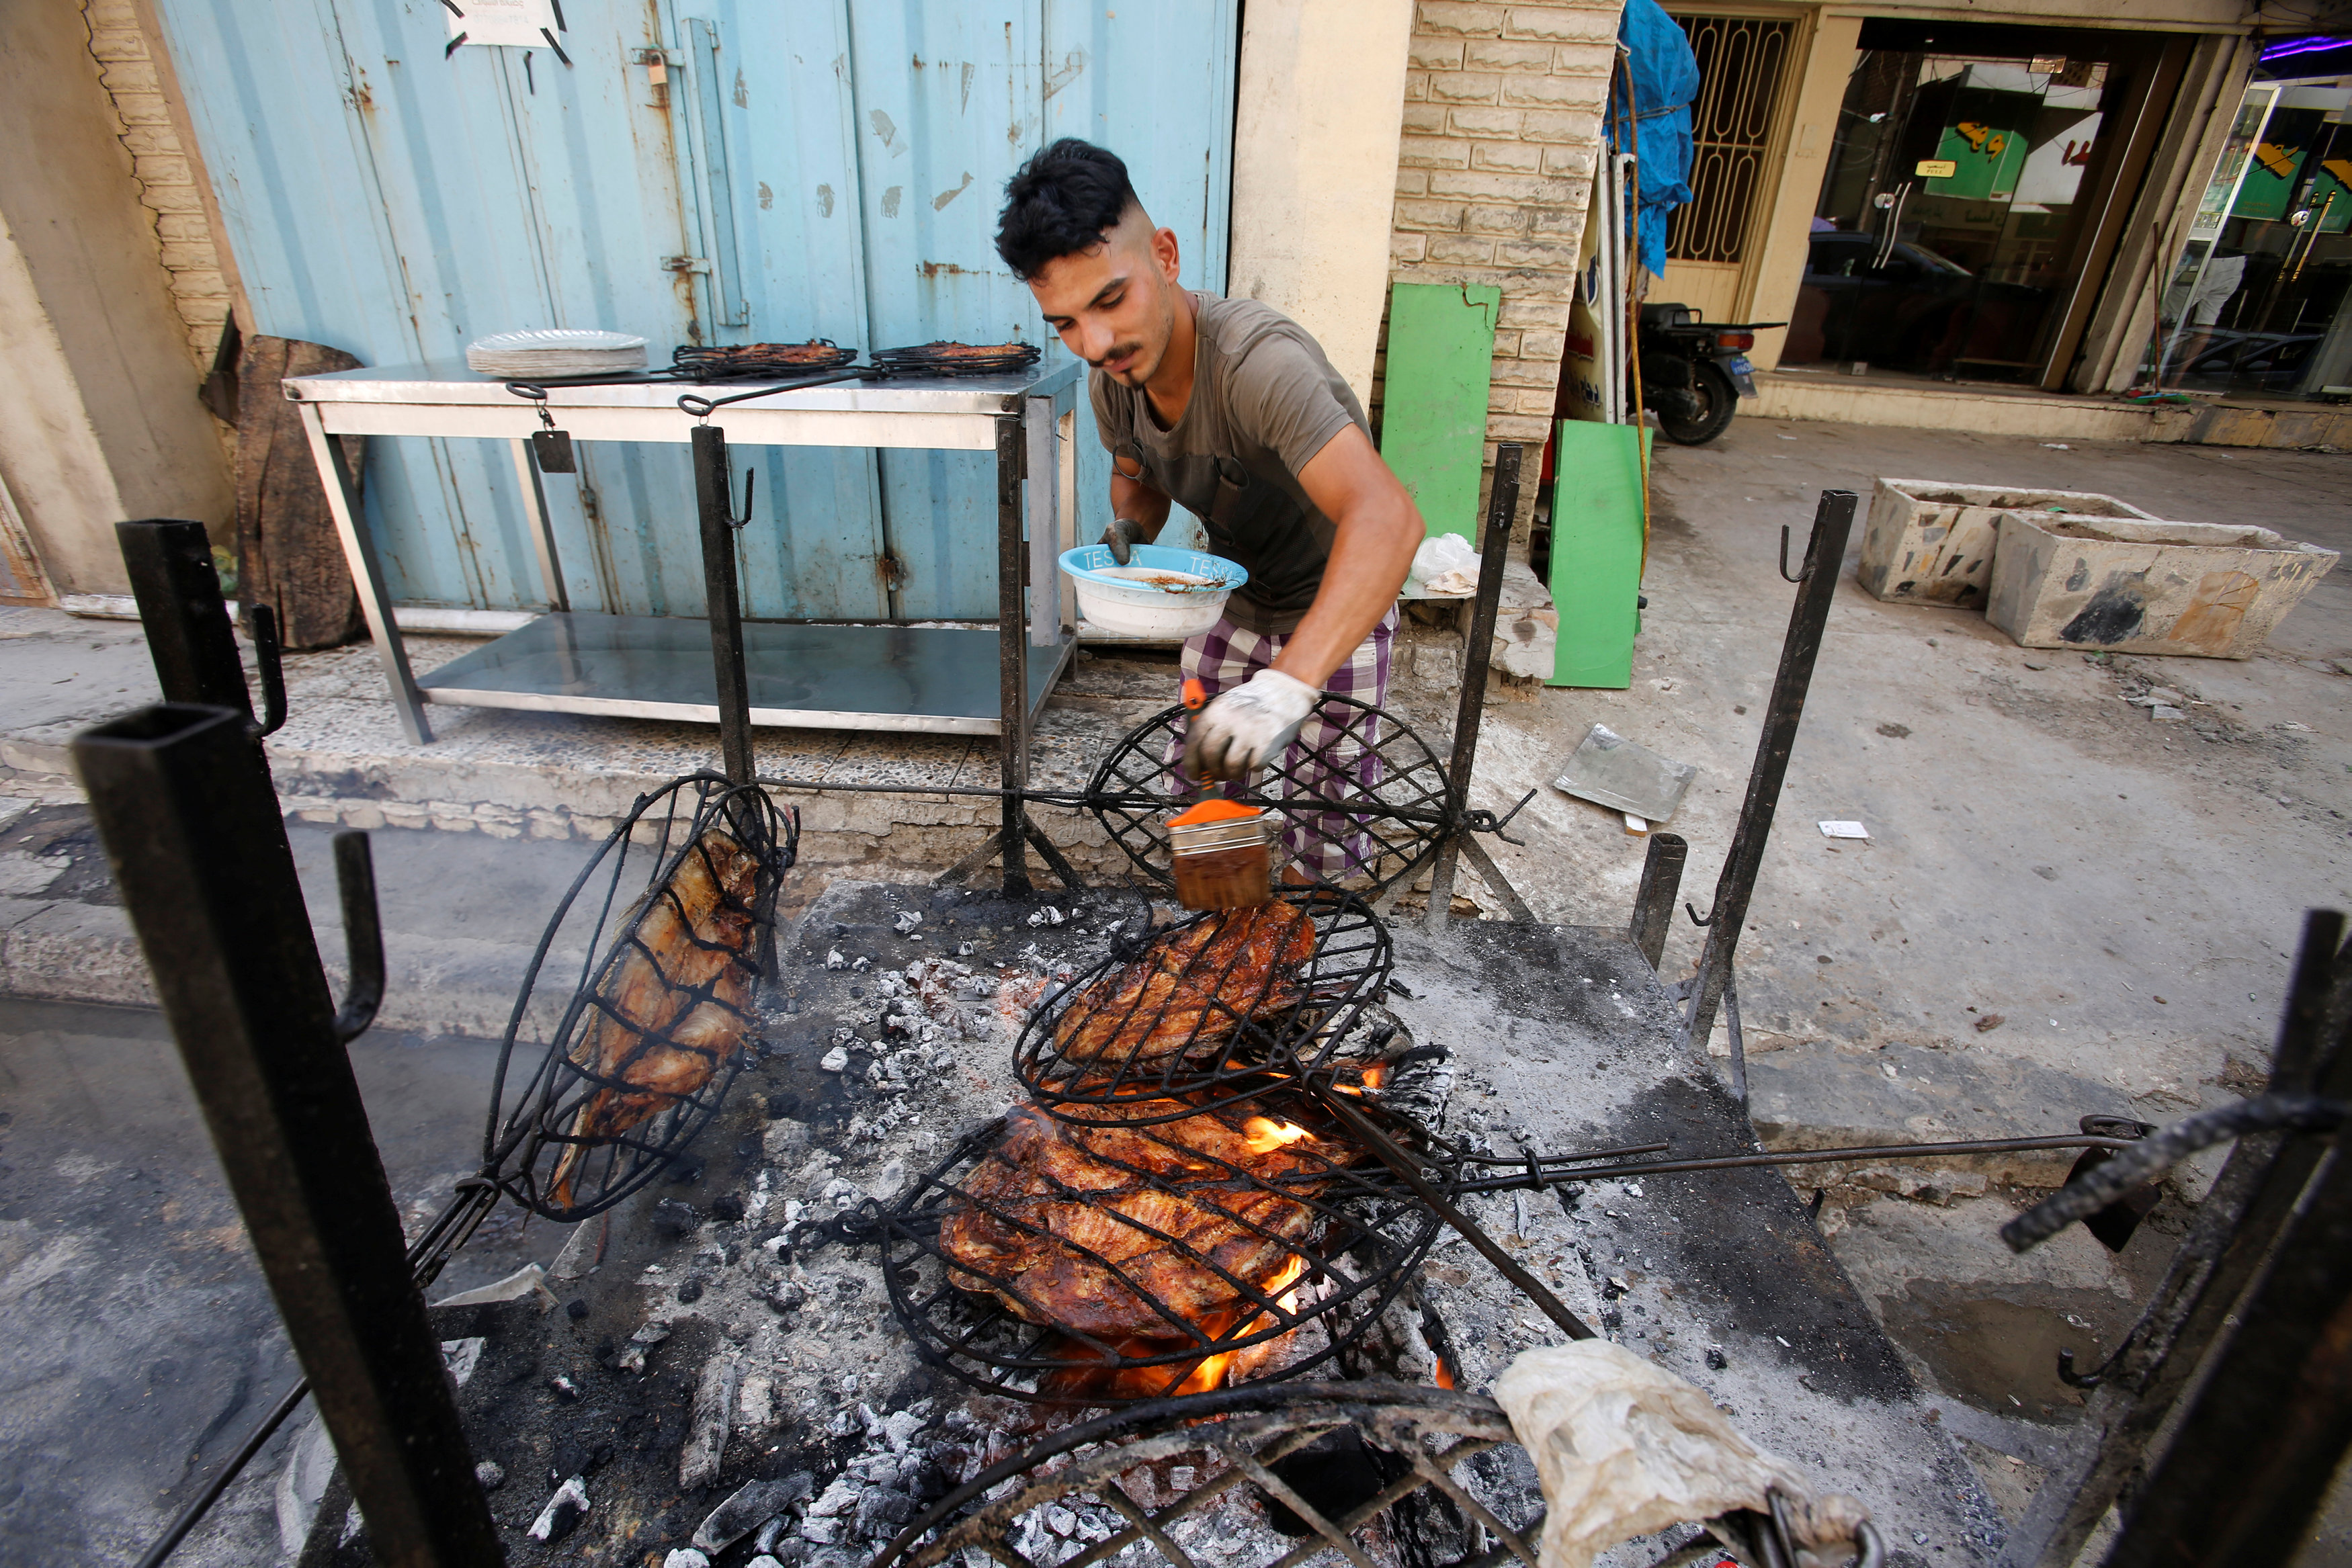 In pictures: Fish vendors at Iraqi market